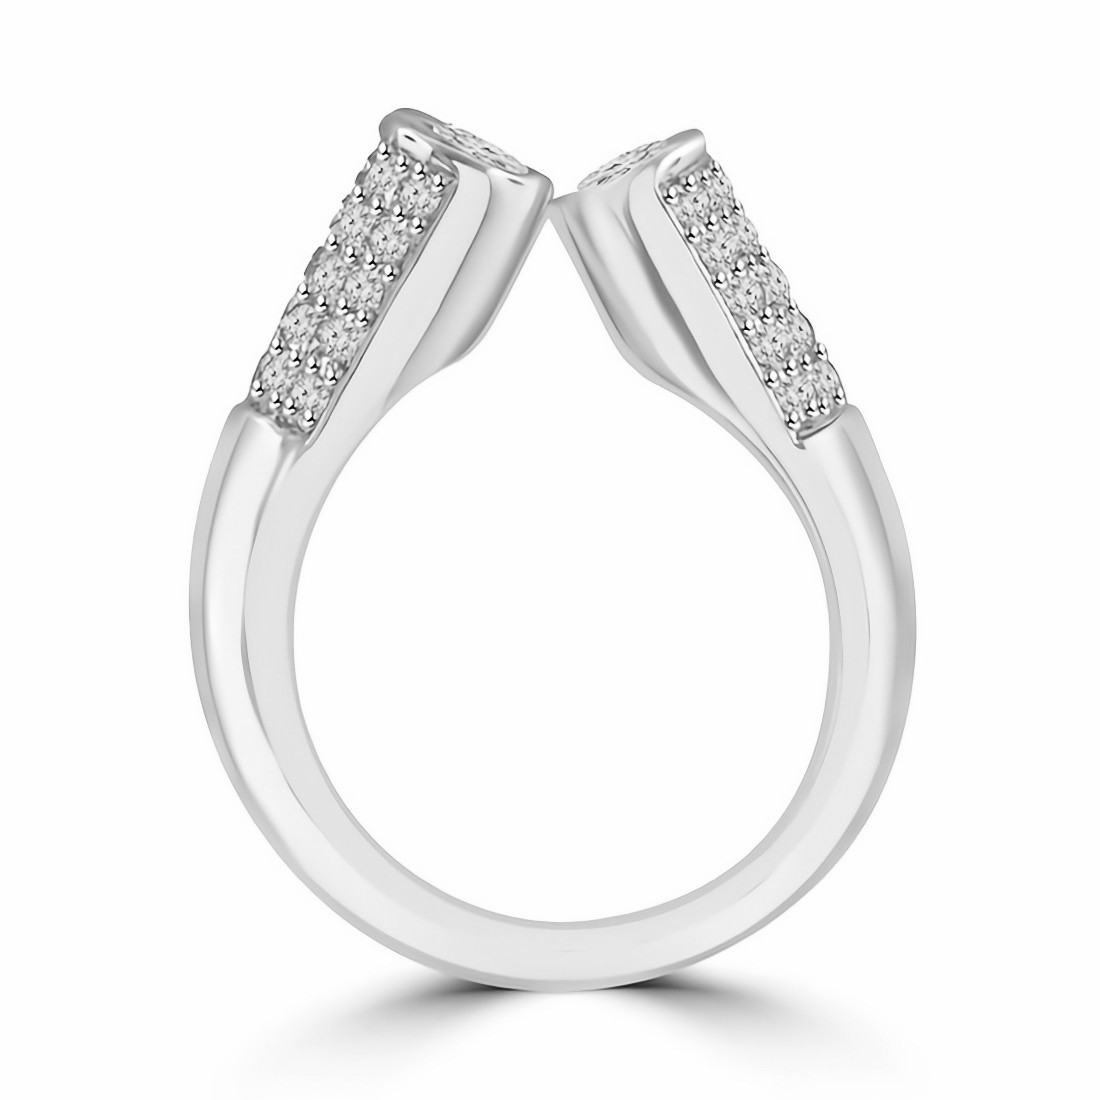 Buy Cocktail Ring Designs Online | CaratLane